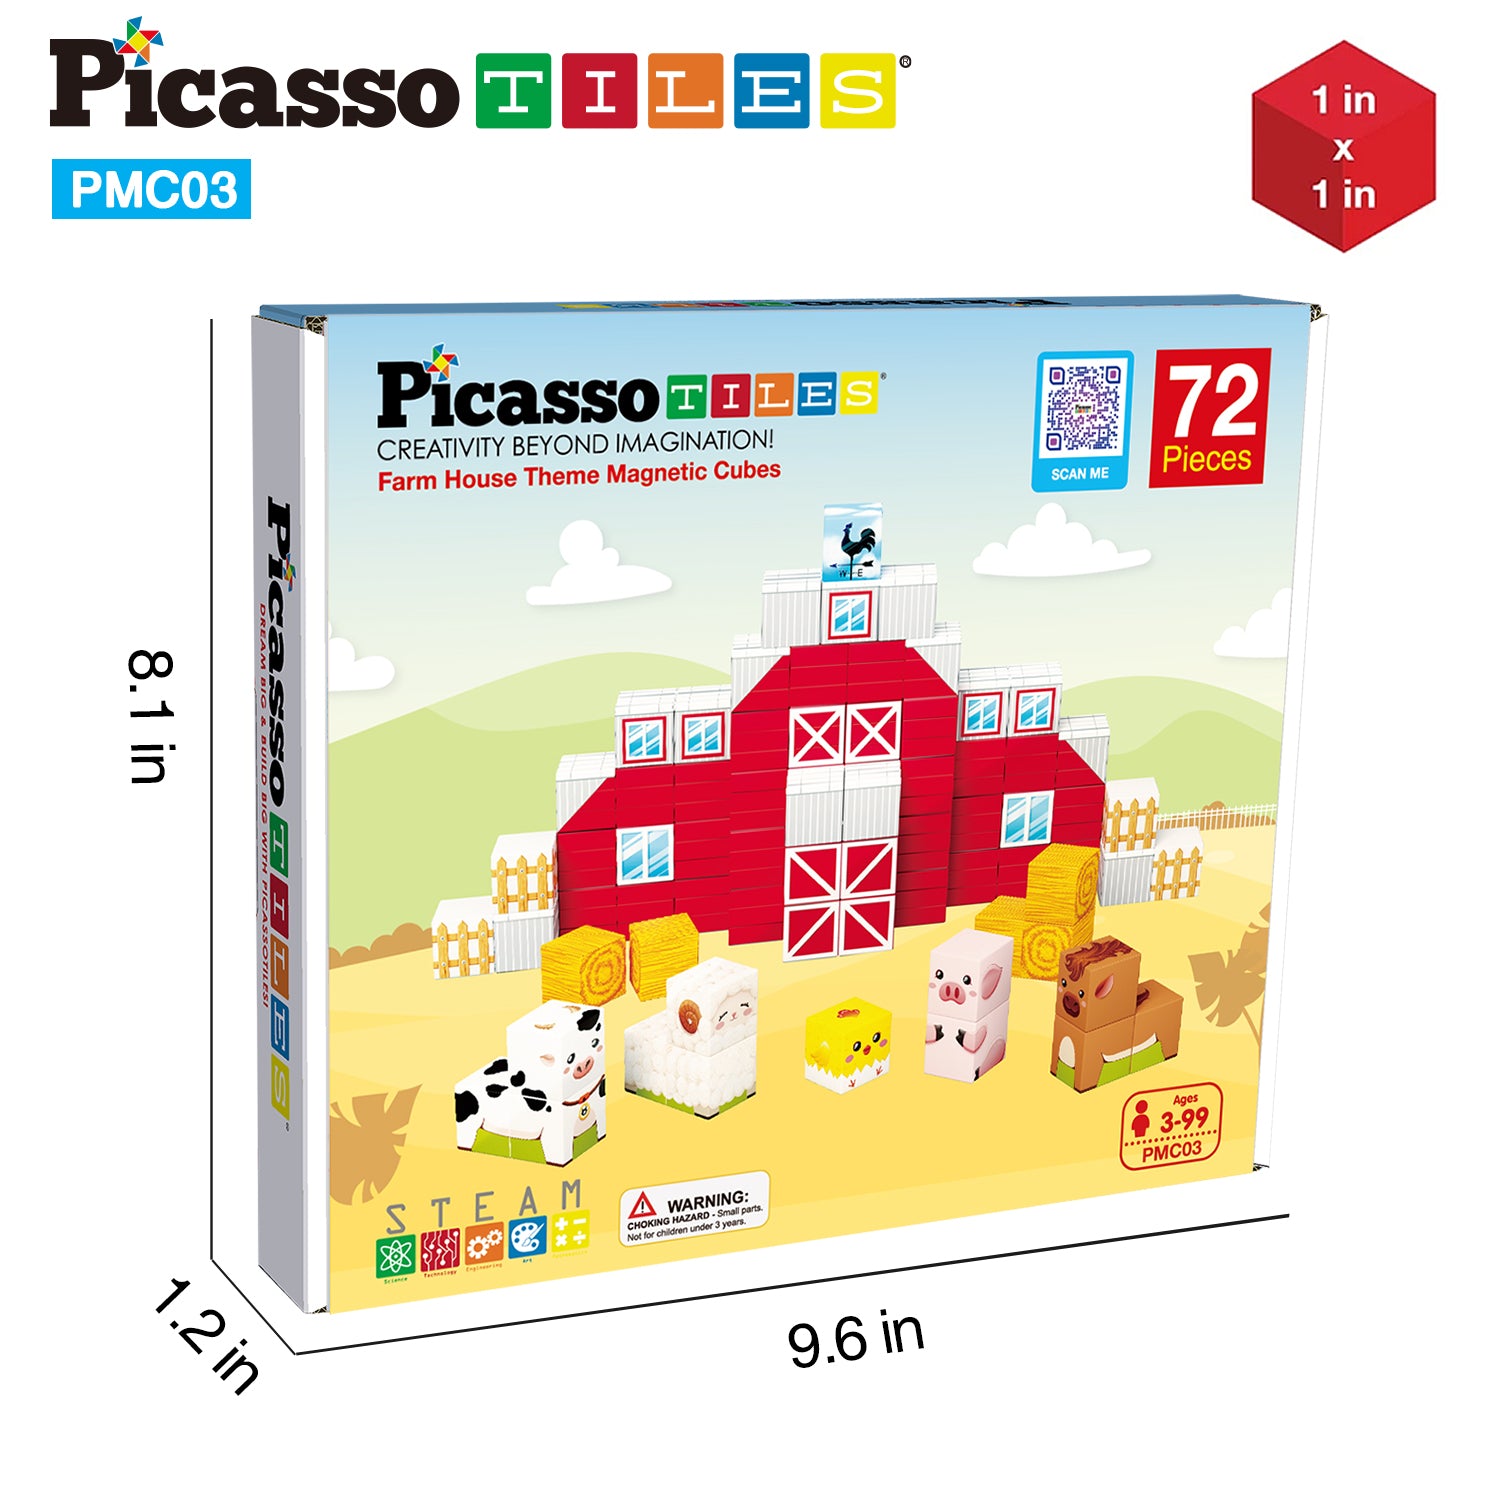 PicassoTiles Magnet Cube Farm House Mix and Match Building Set